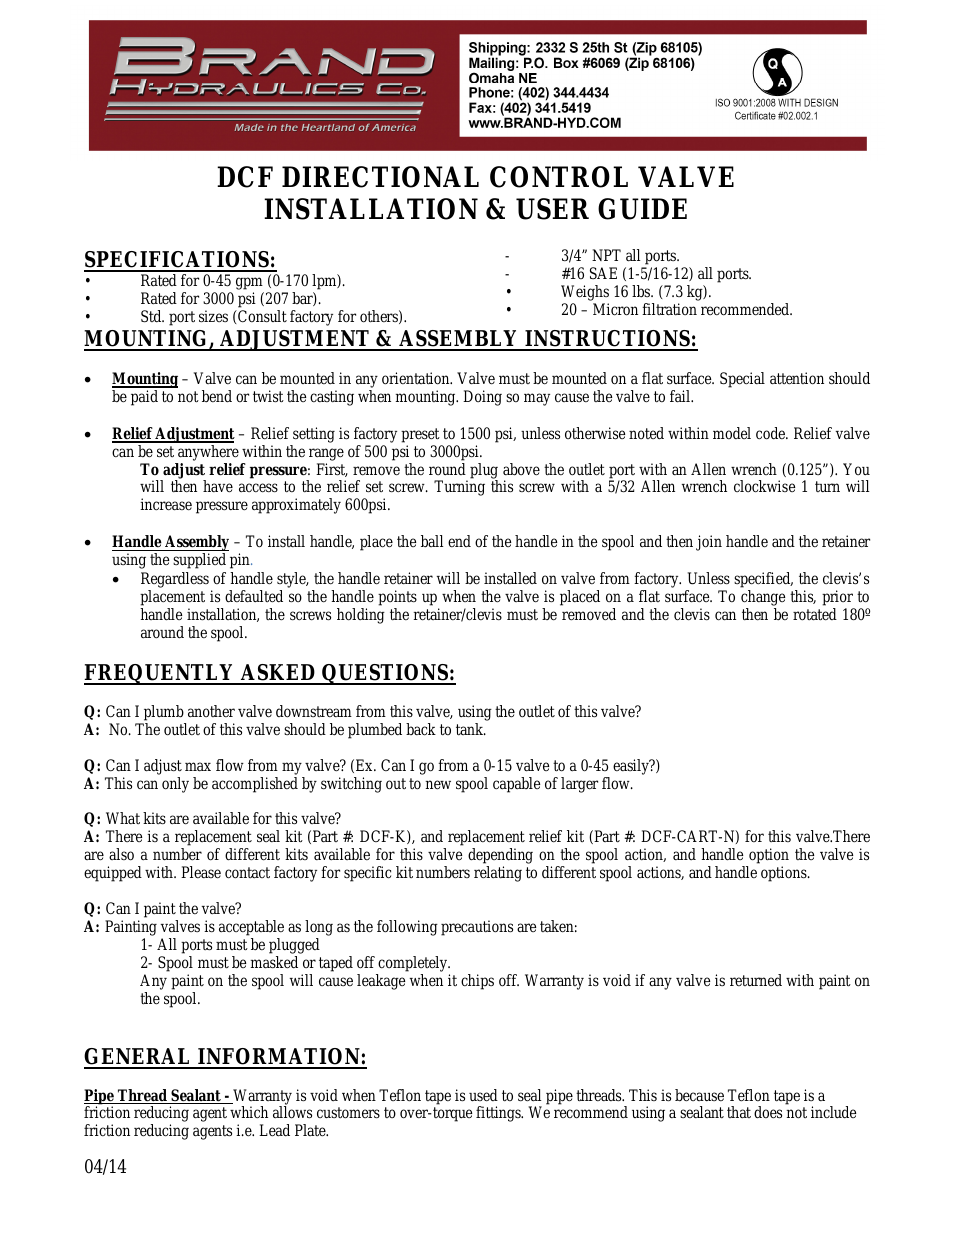 DCF DIRECTIONAL CONTROL VALVE